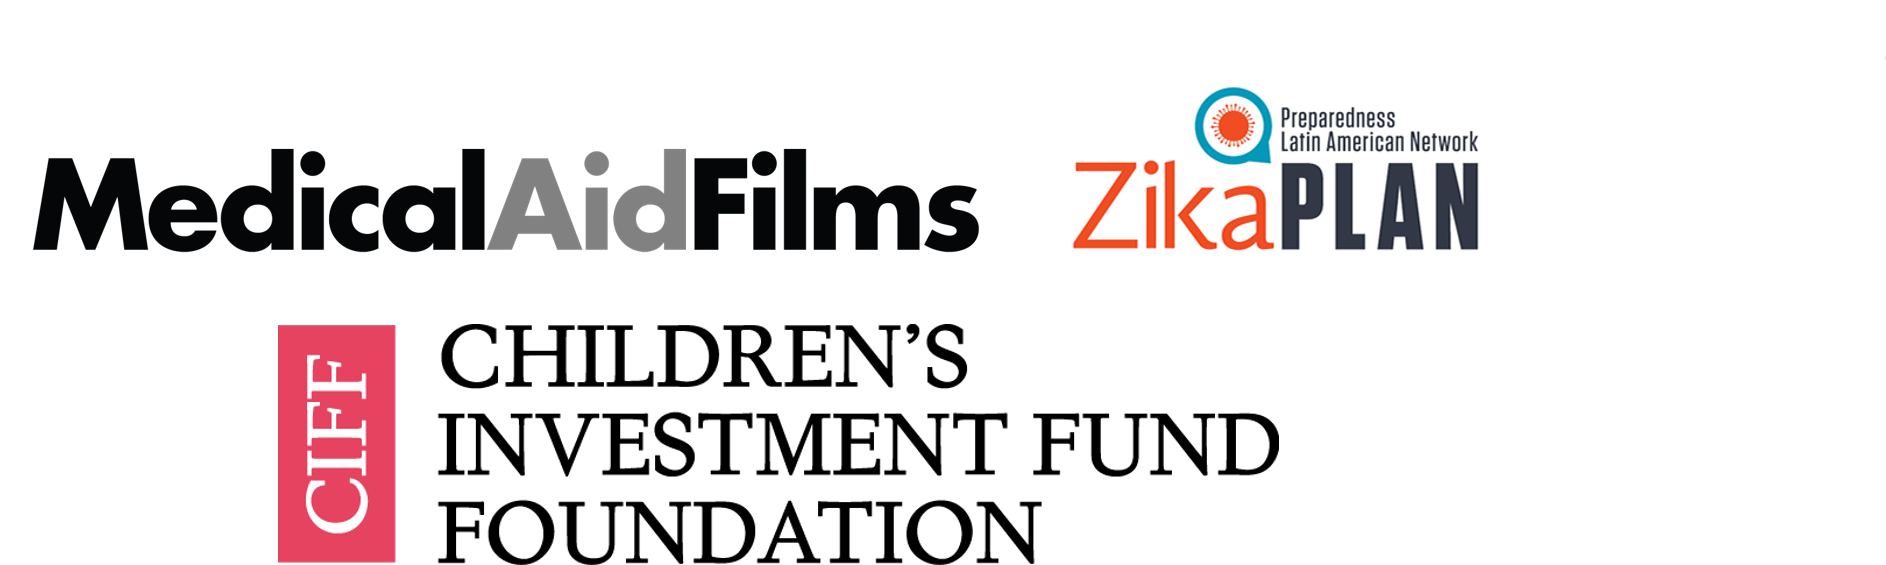 Zika film-screening collaborators